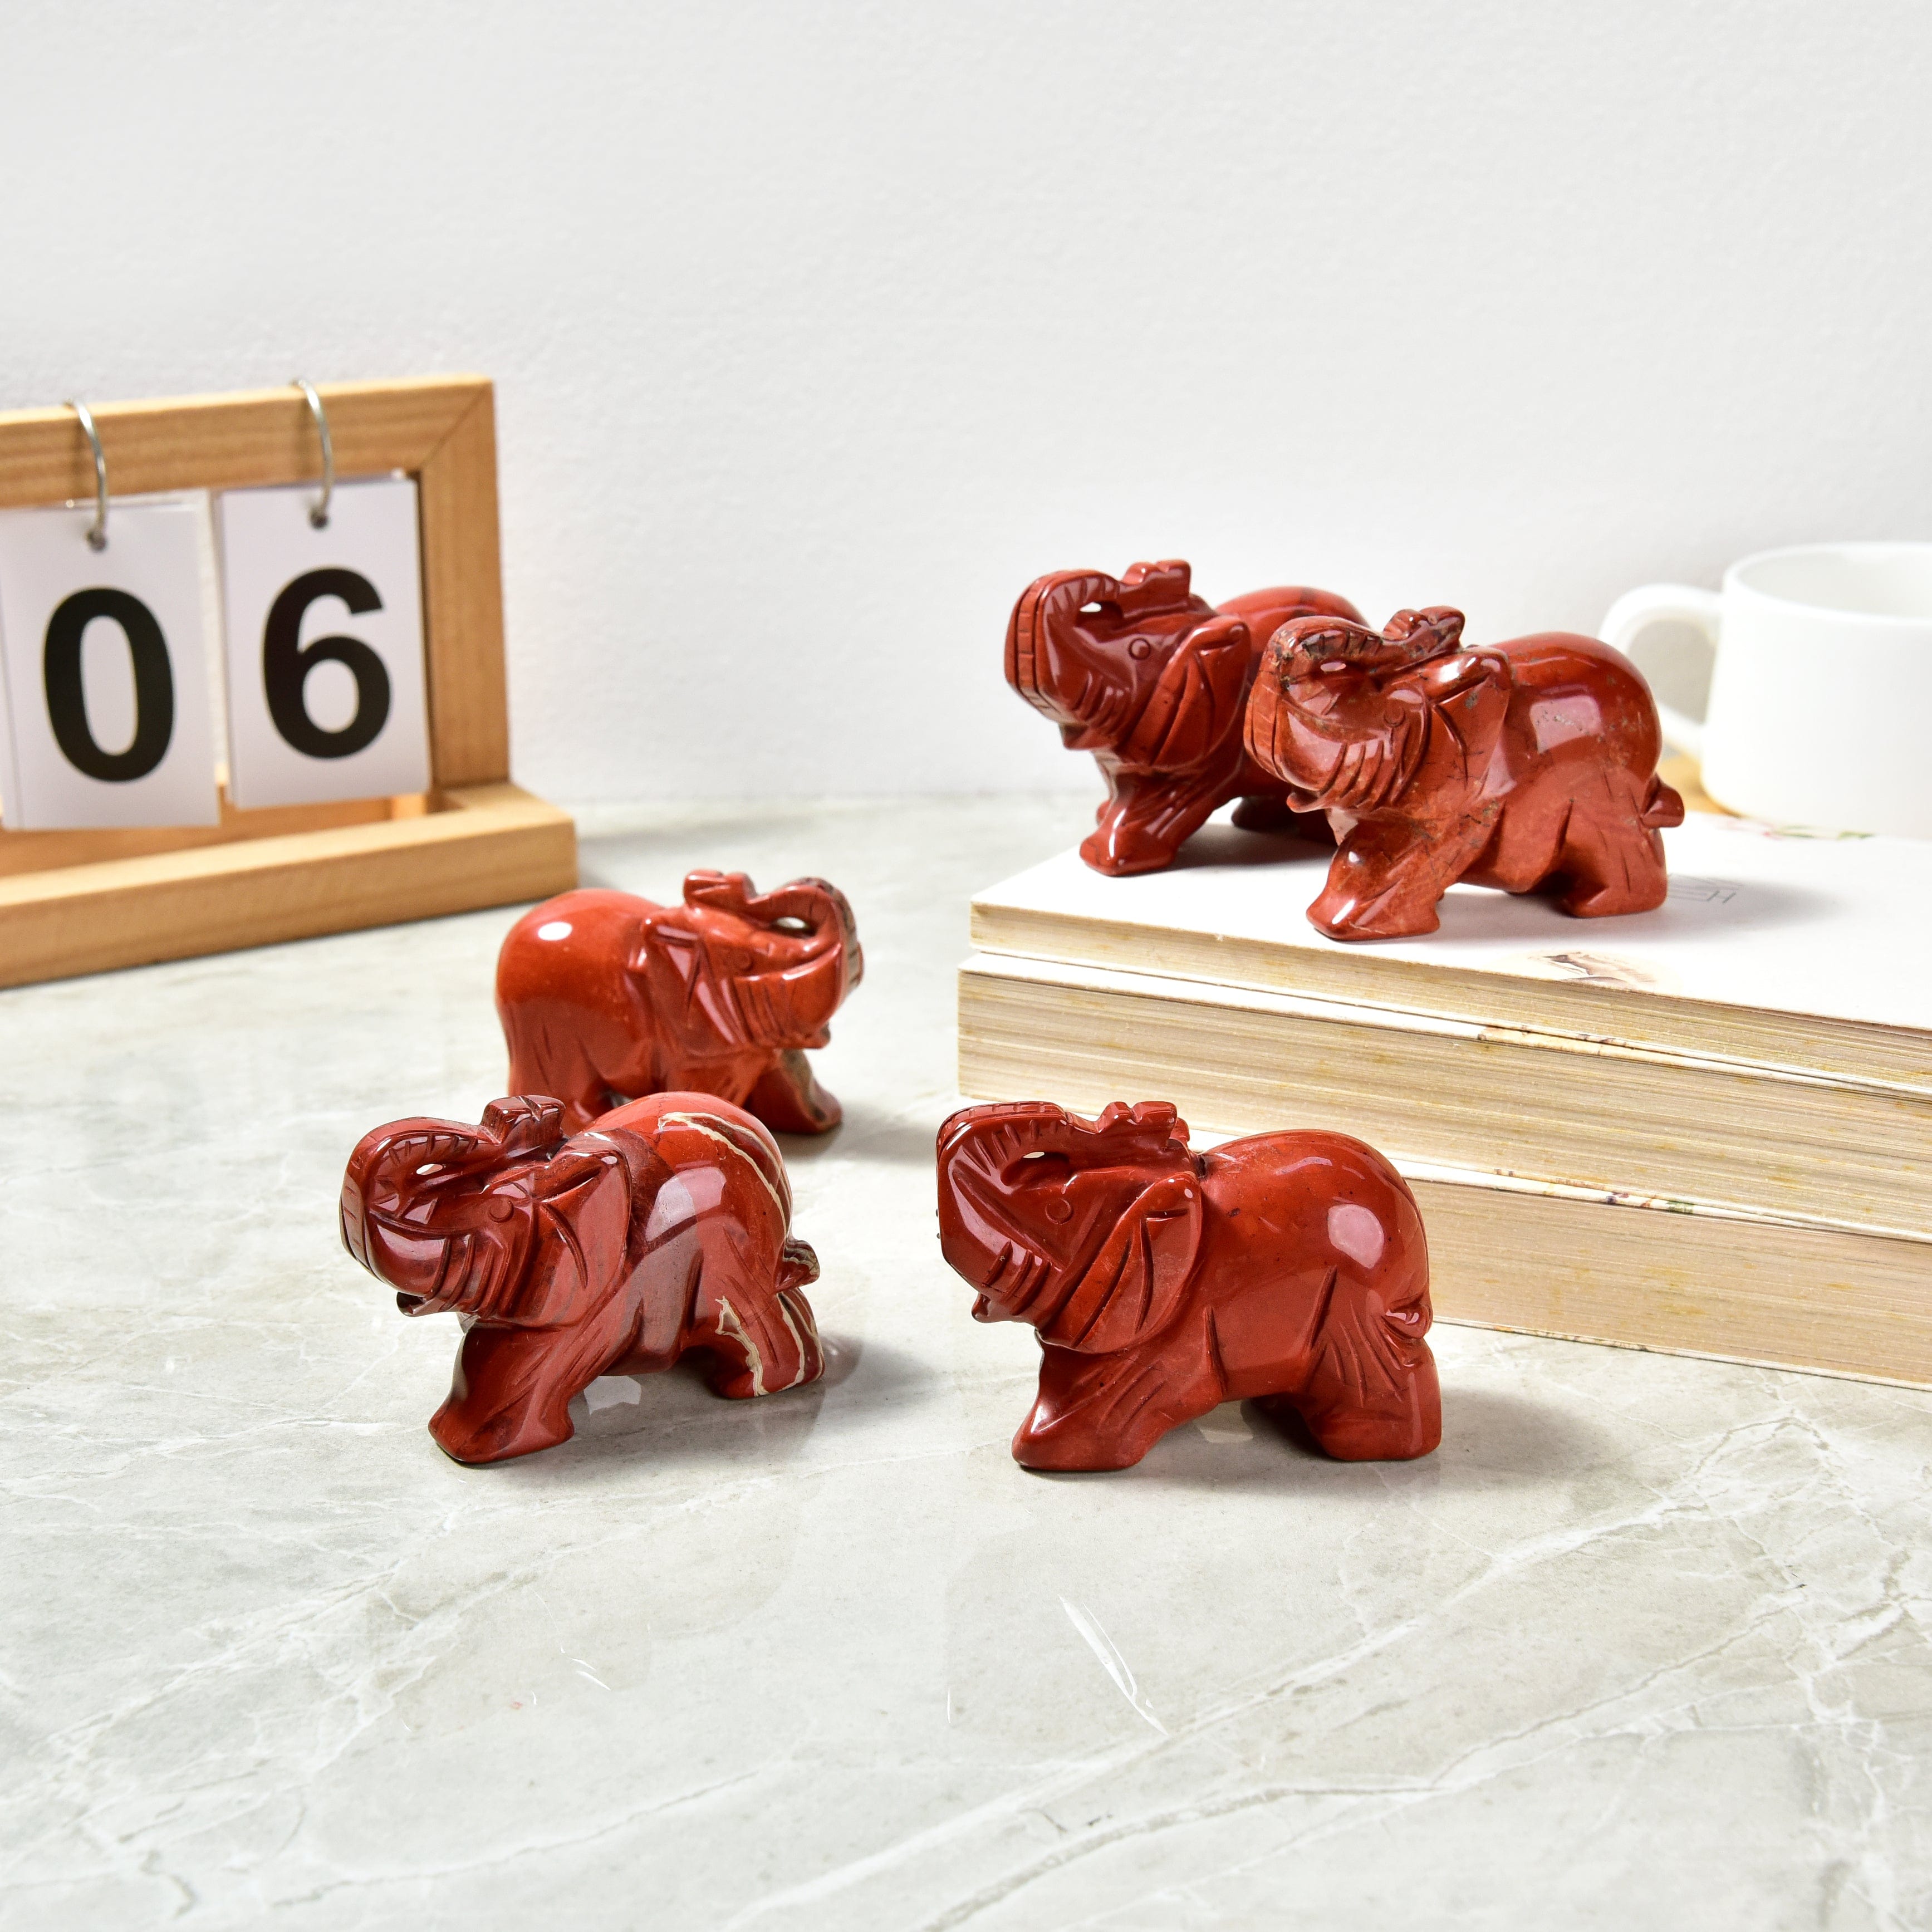 Kalifano Gemstone Carvings Red Jasper Elephant Carving CV35-E-RJ